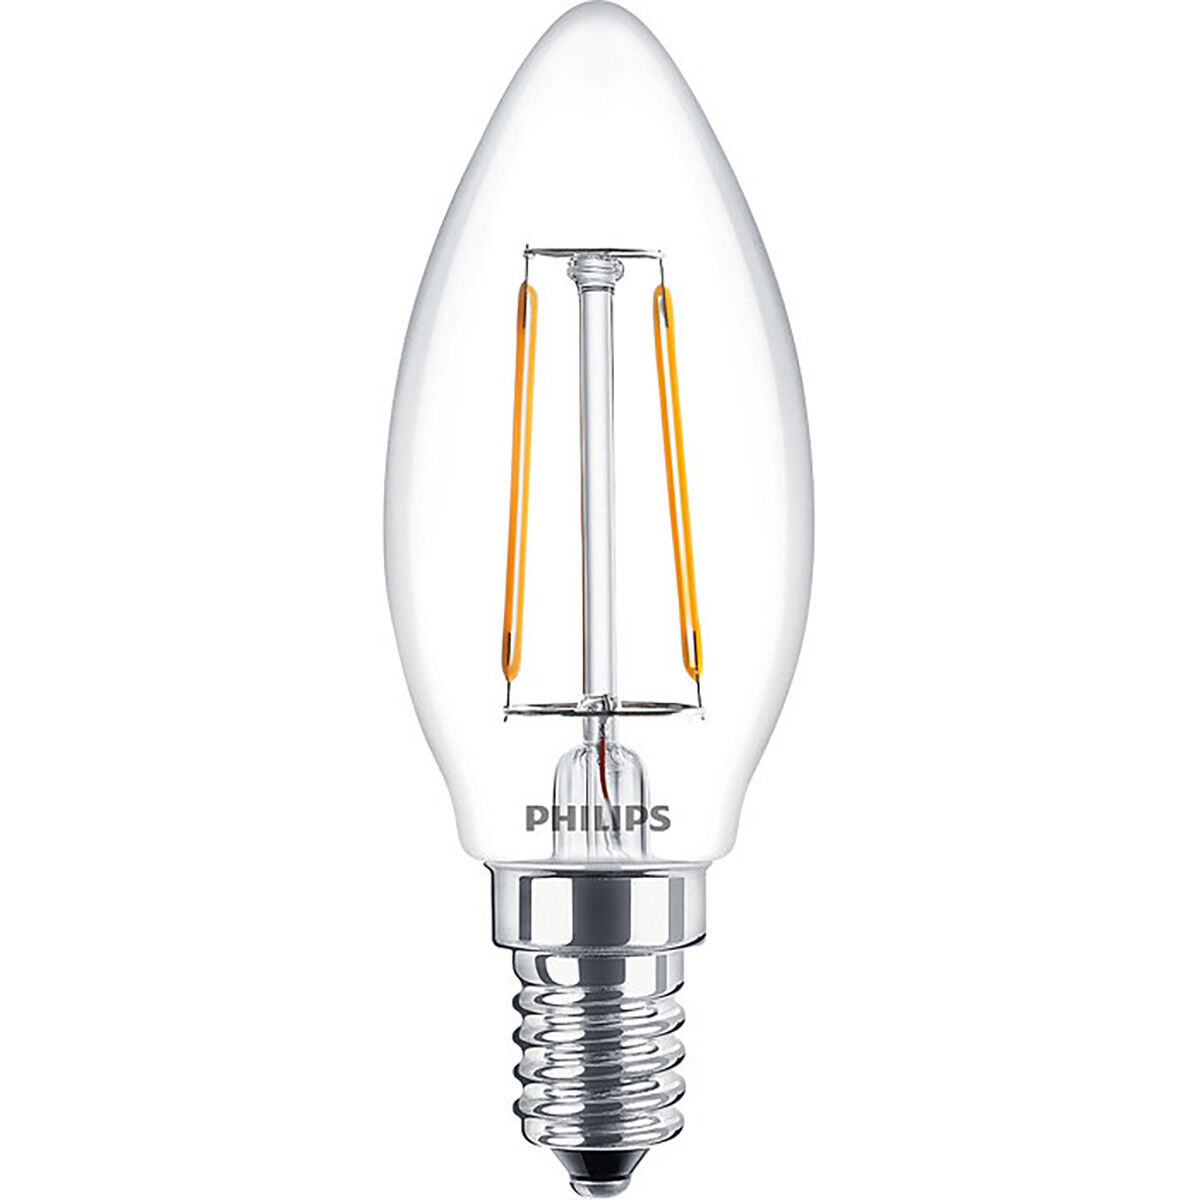 PHILIPS - LED Lamp Filament - Classic LEDCandle 827 B35 CL - E14 Fitting - 2W - Warm Wit 2700K   Vervangt 25W